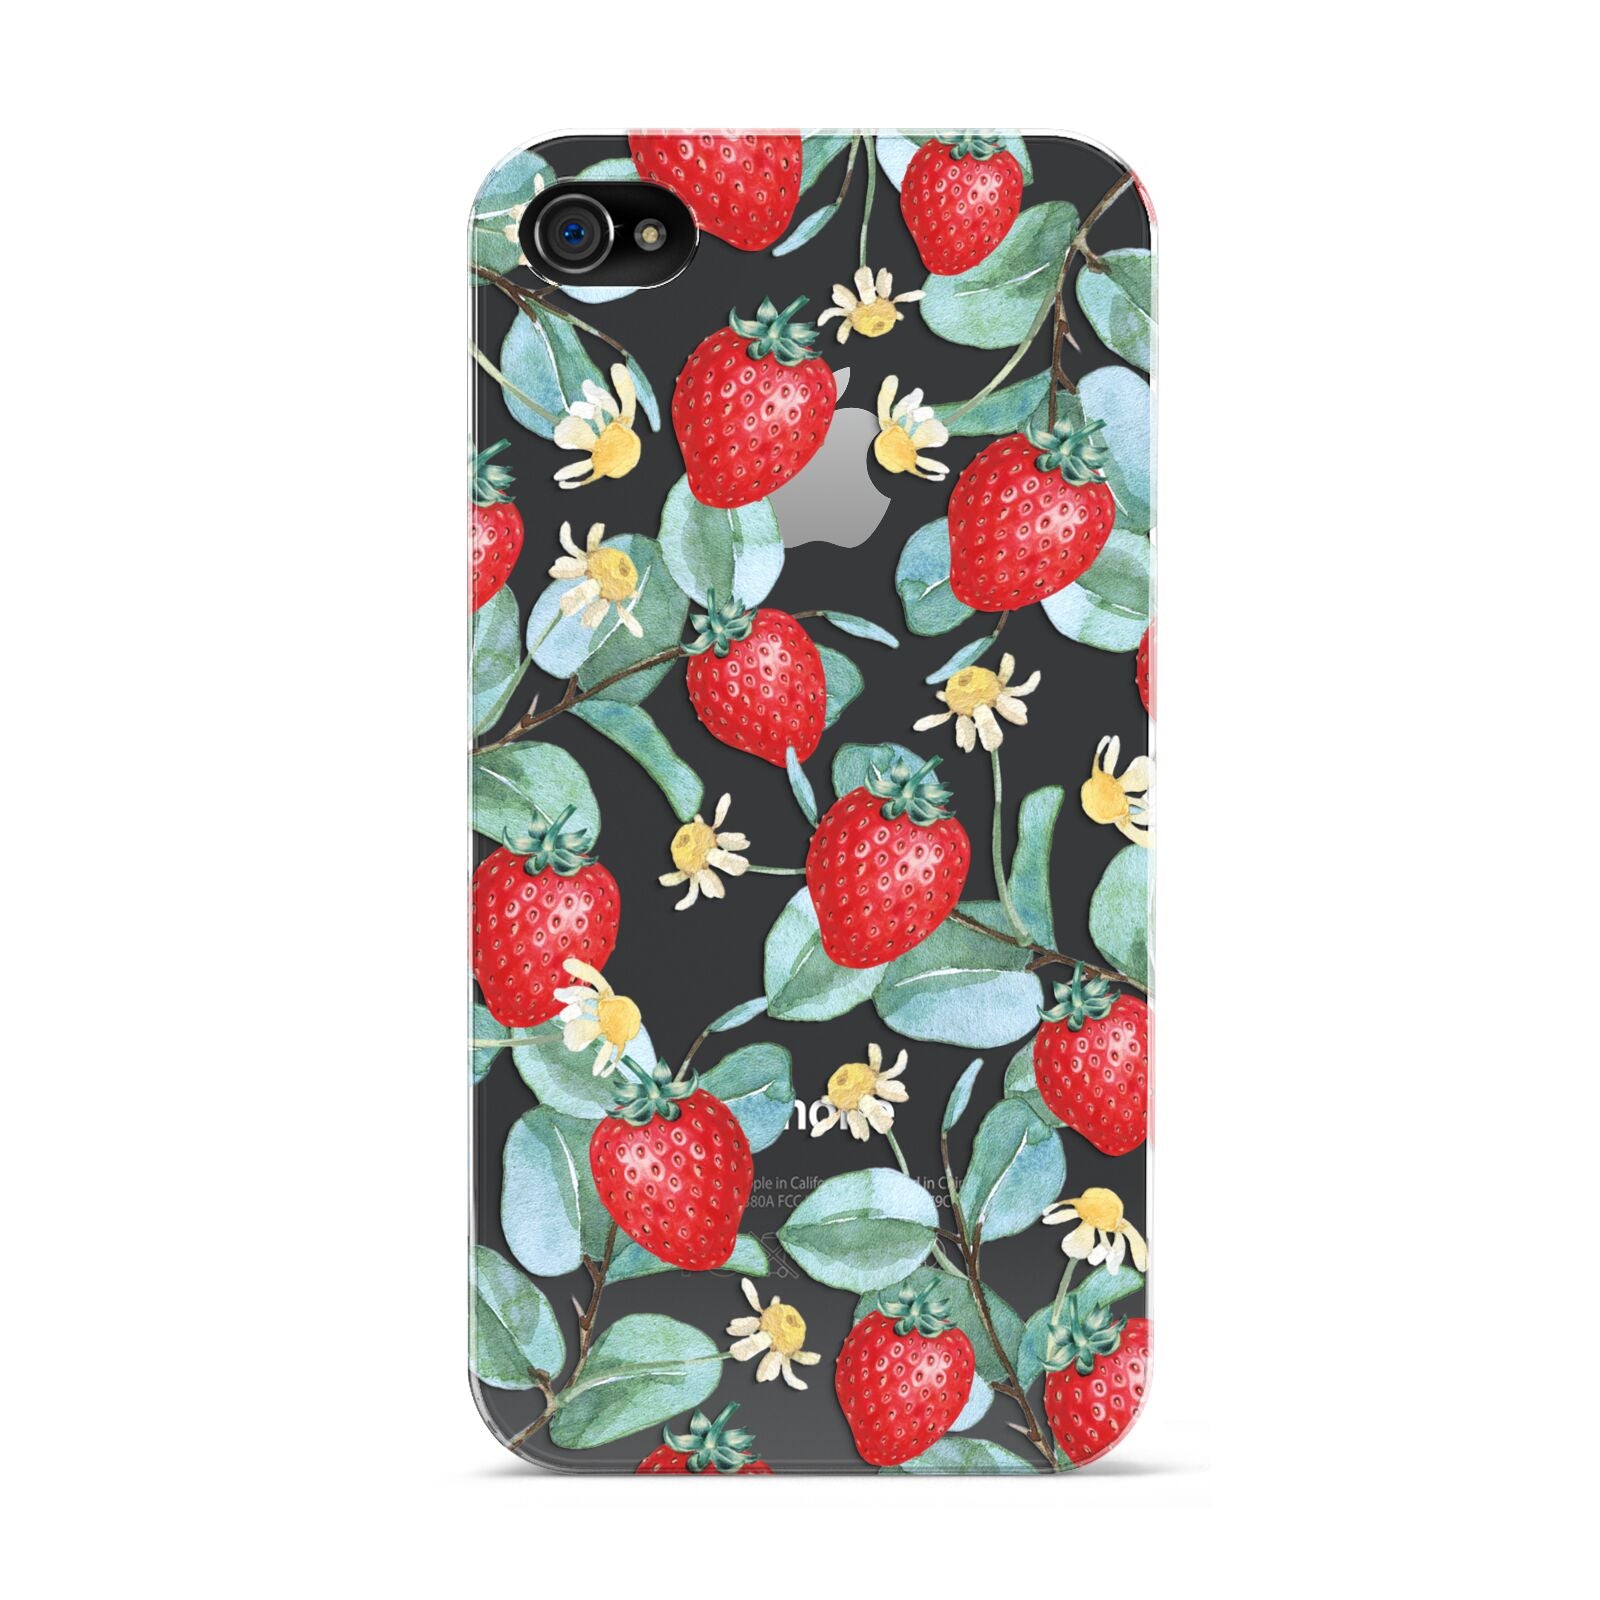 Strawberry Plant Apple iPhone 4s Case